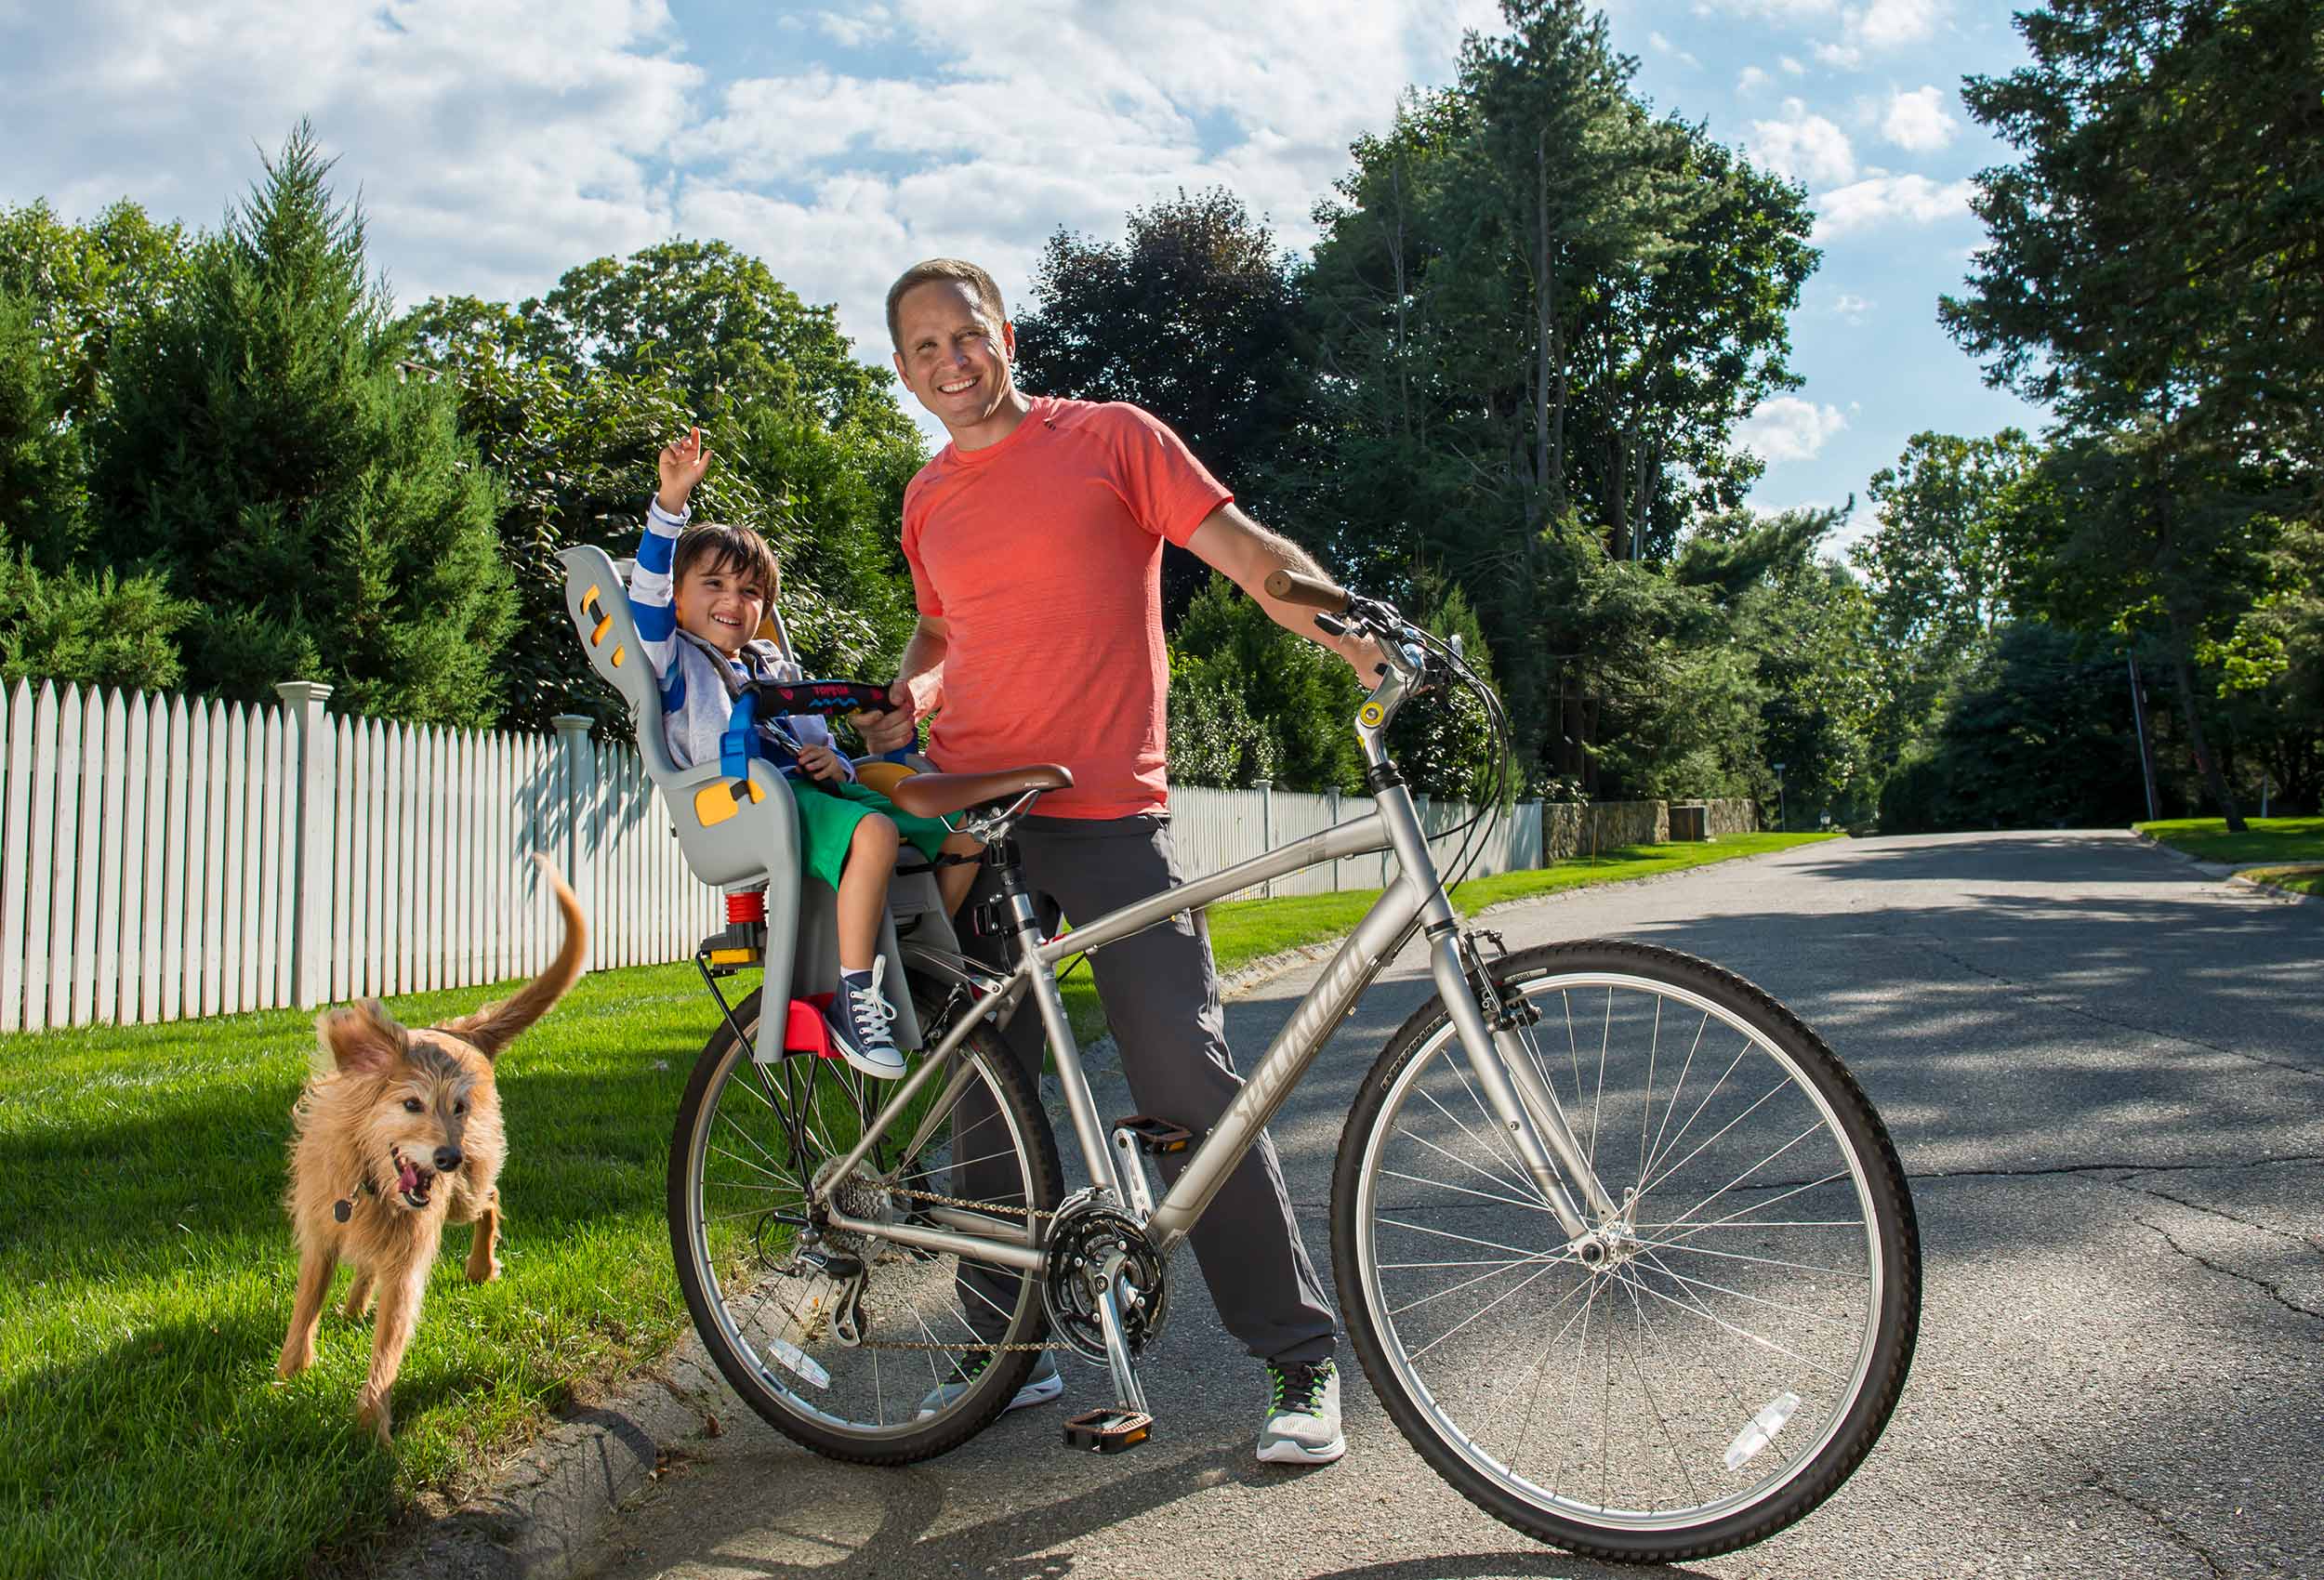 Father takes toddler on bike ride with dog on suburban street